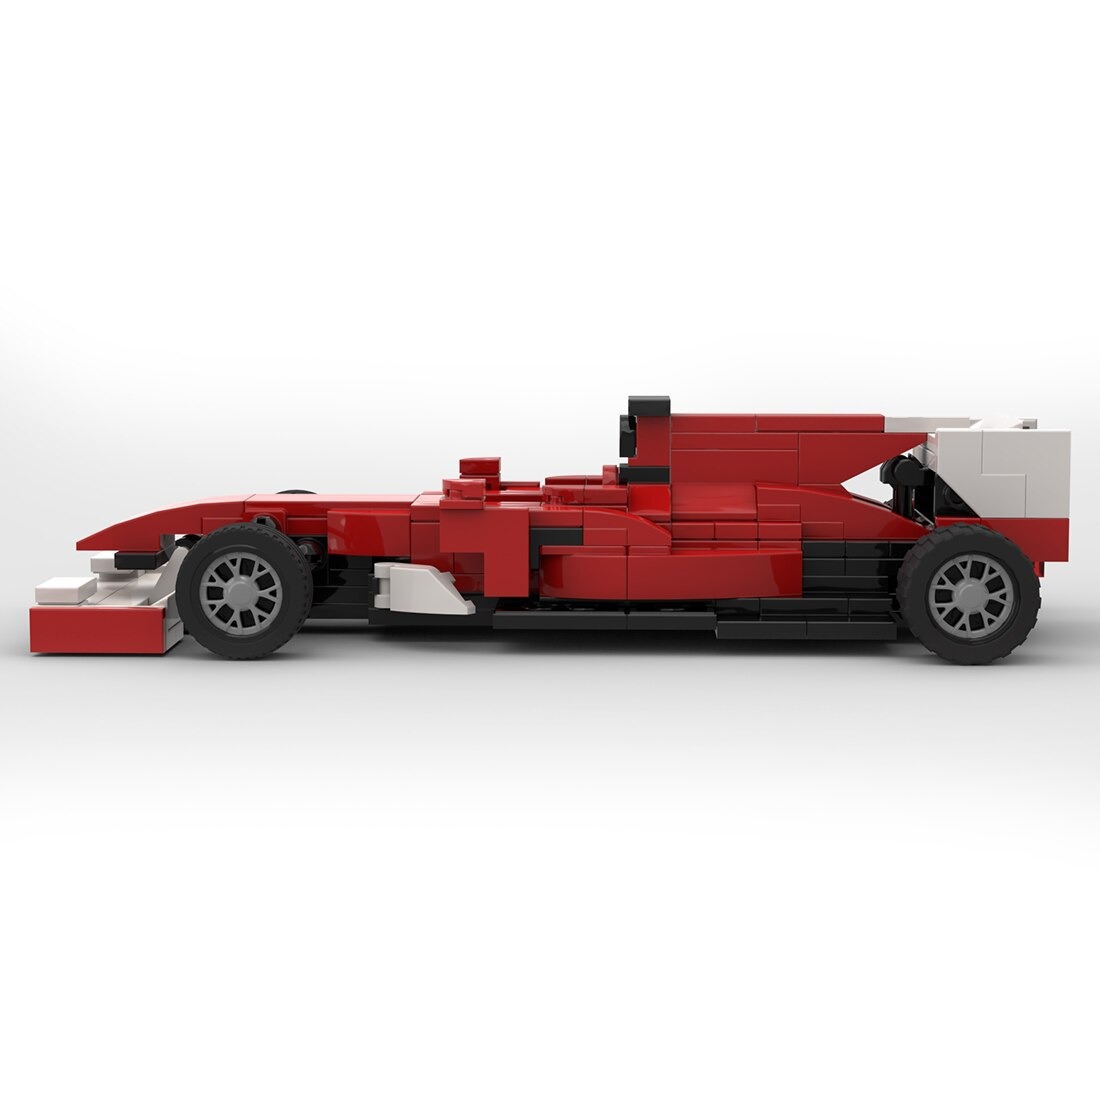 MOCBRICKLAND MOC-100267 F10 Racing Car